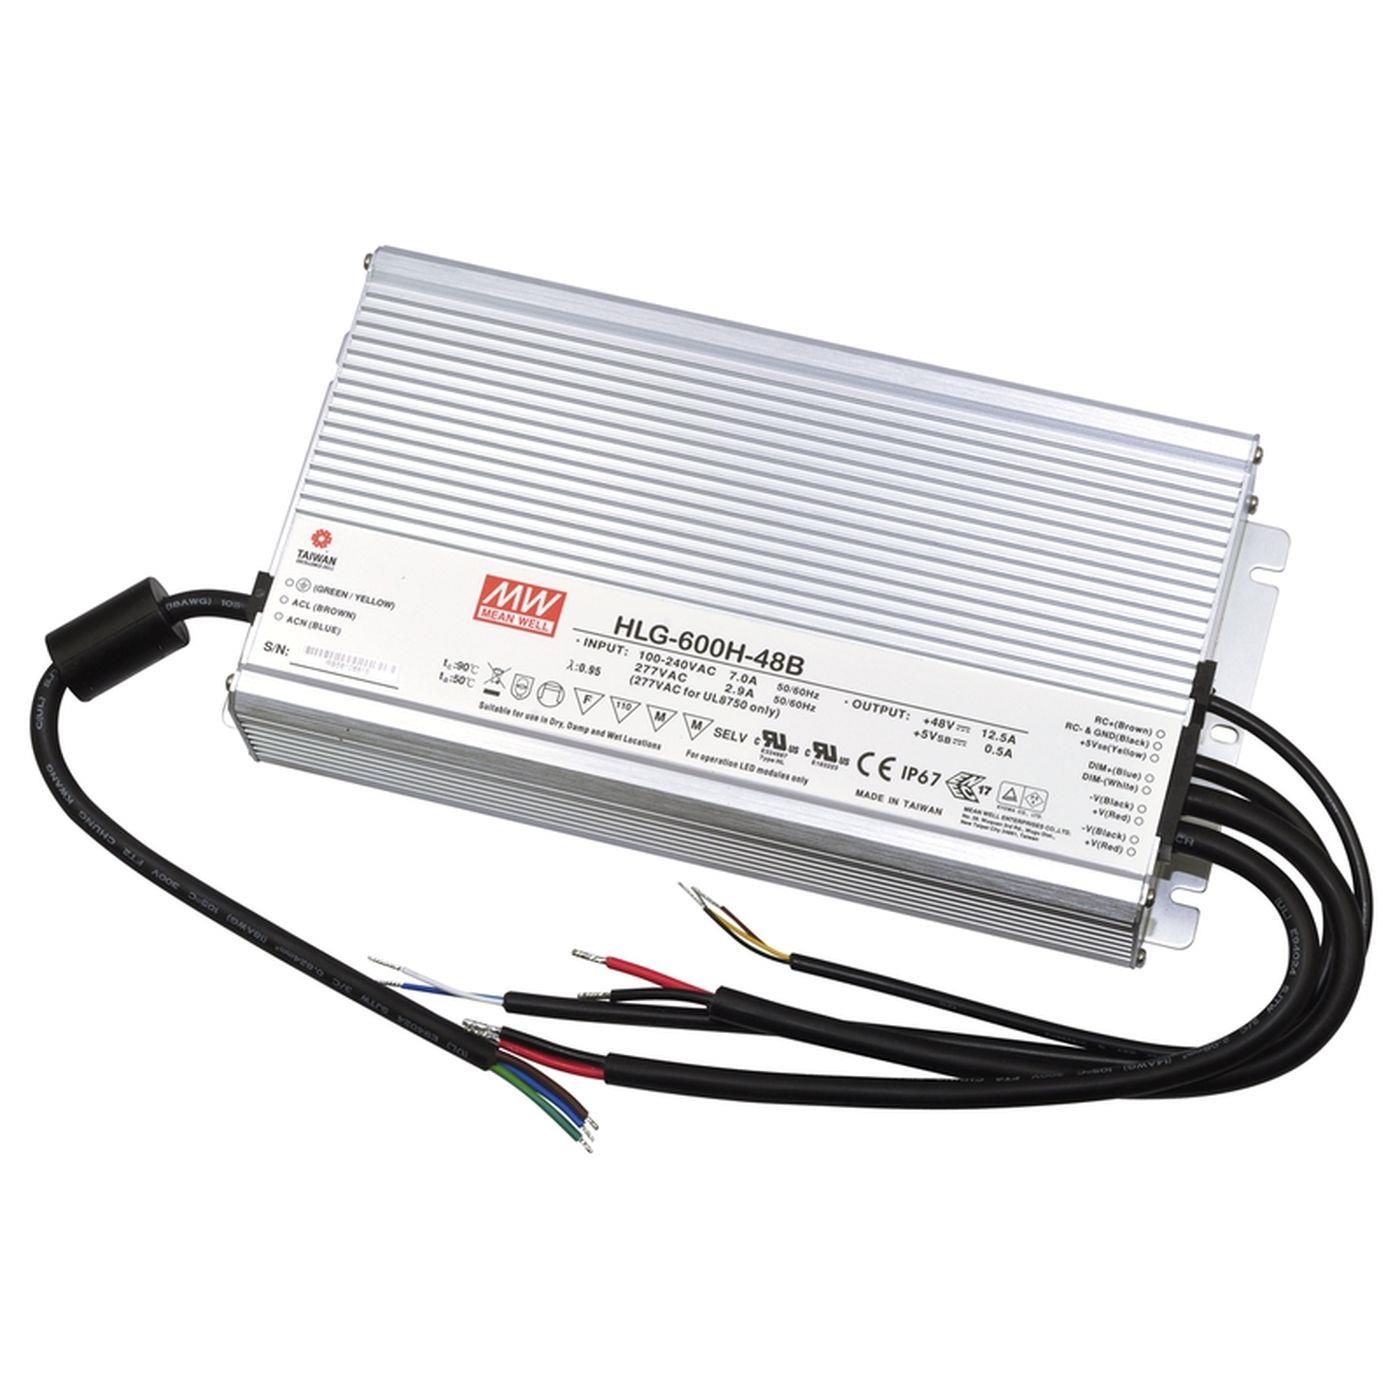 HLG-600H-24B 600W 24V 25A LED power supply Transformer Driver IP67 Dimmable 0-10V PWM